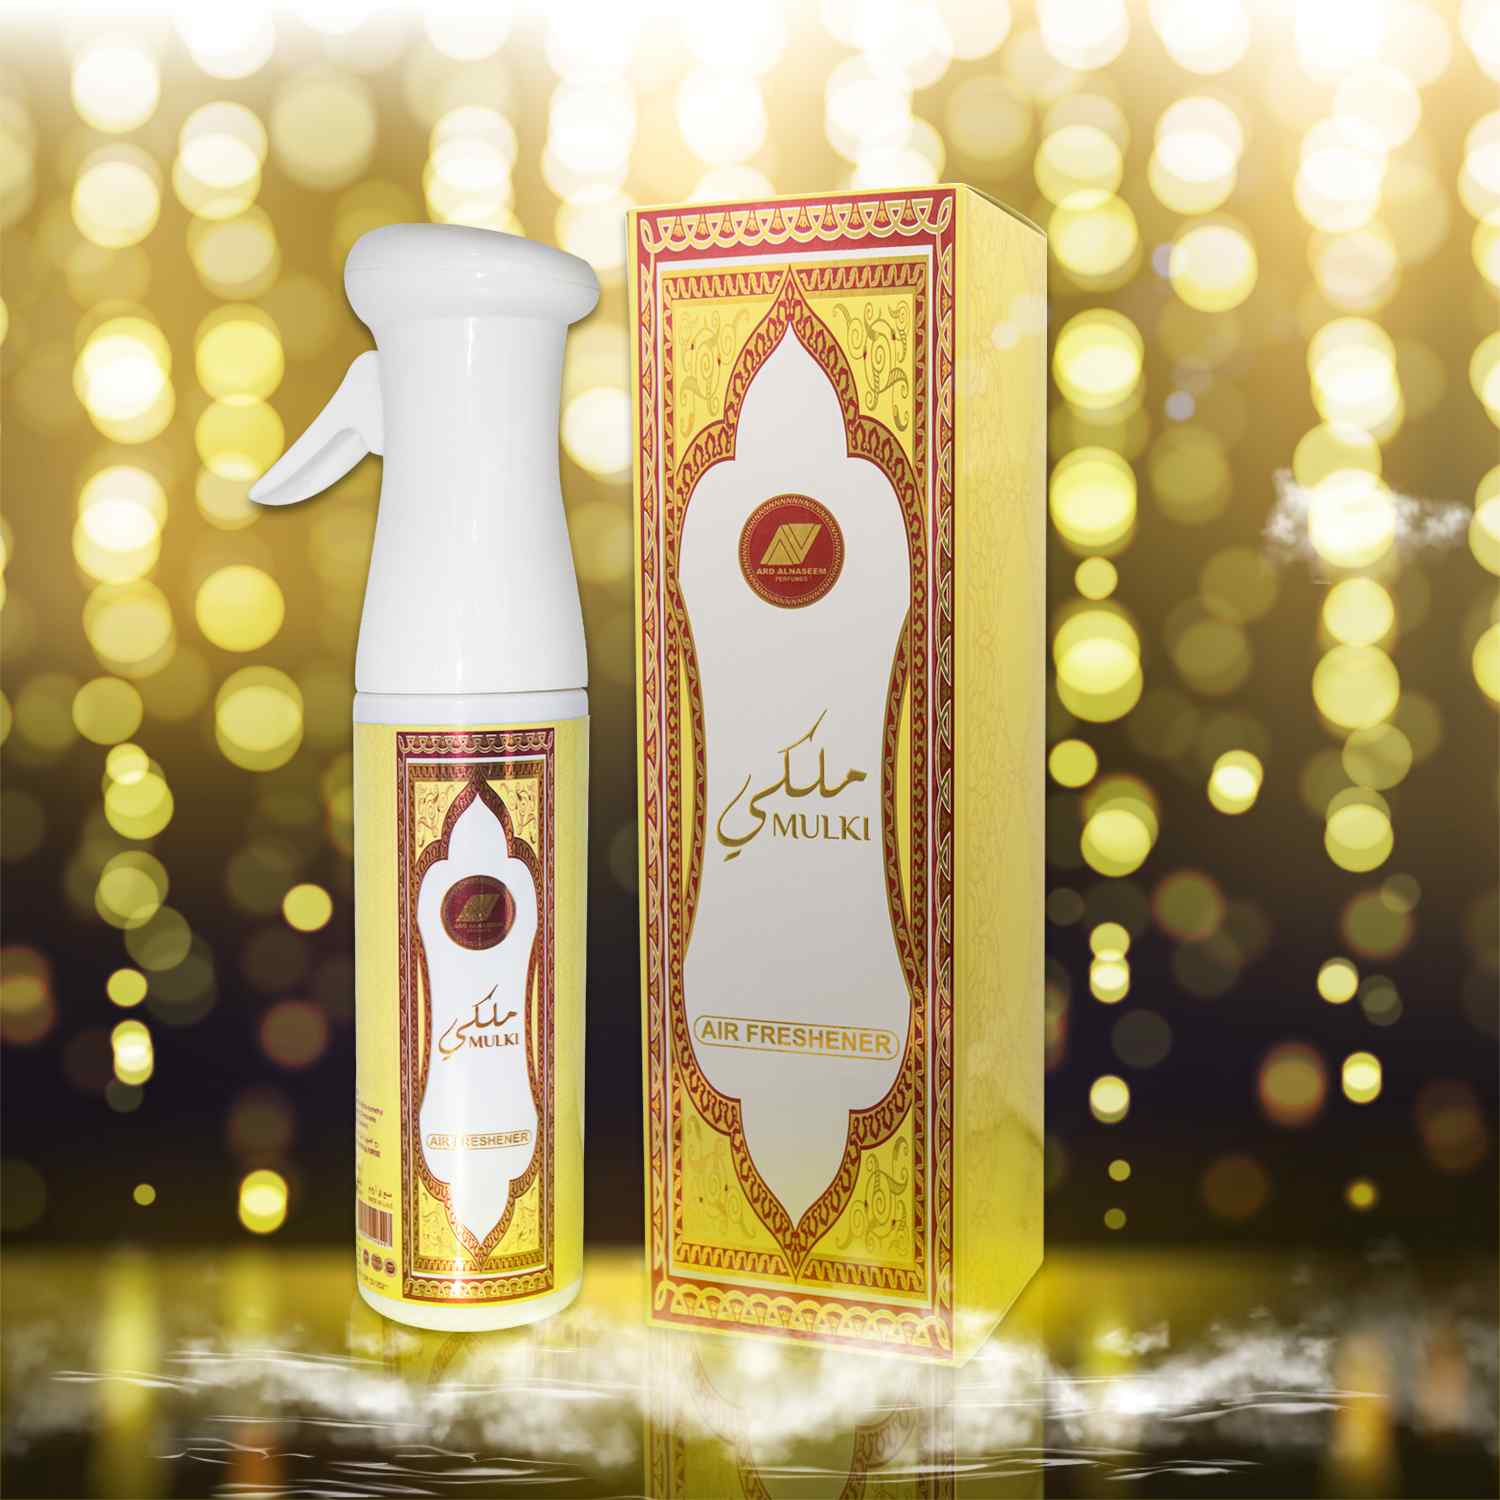 Mulki Air Freshener by ARD perfumes